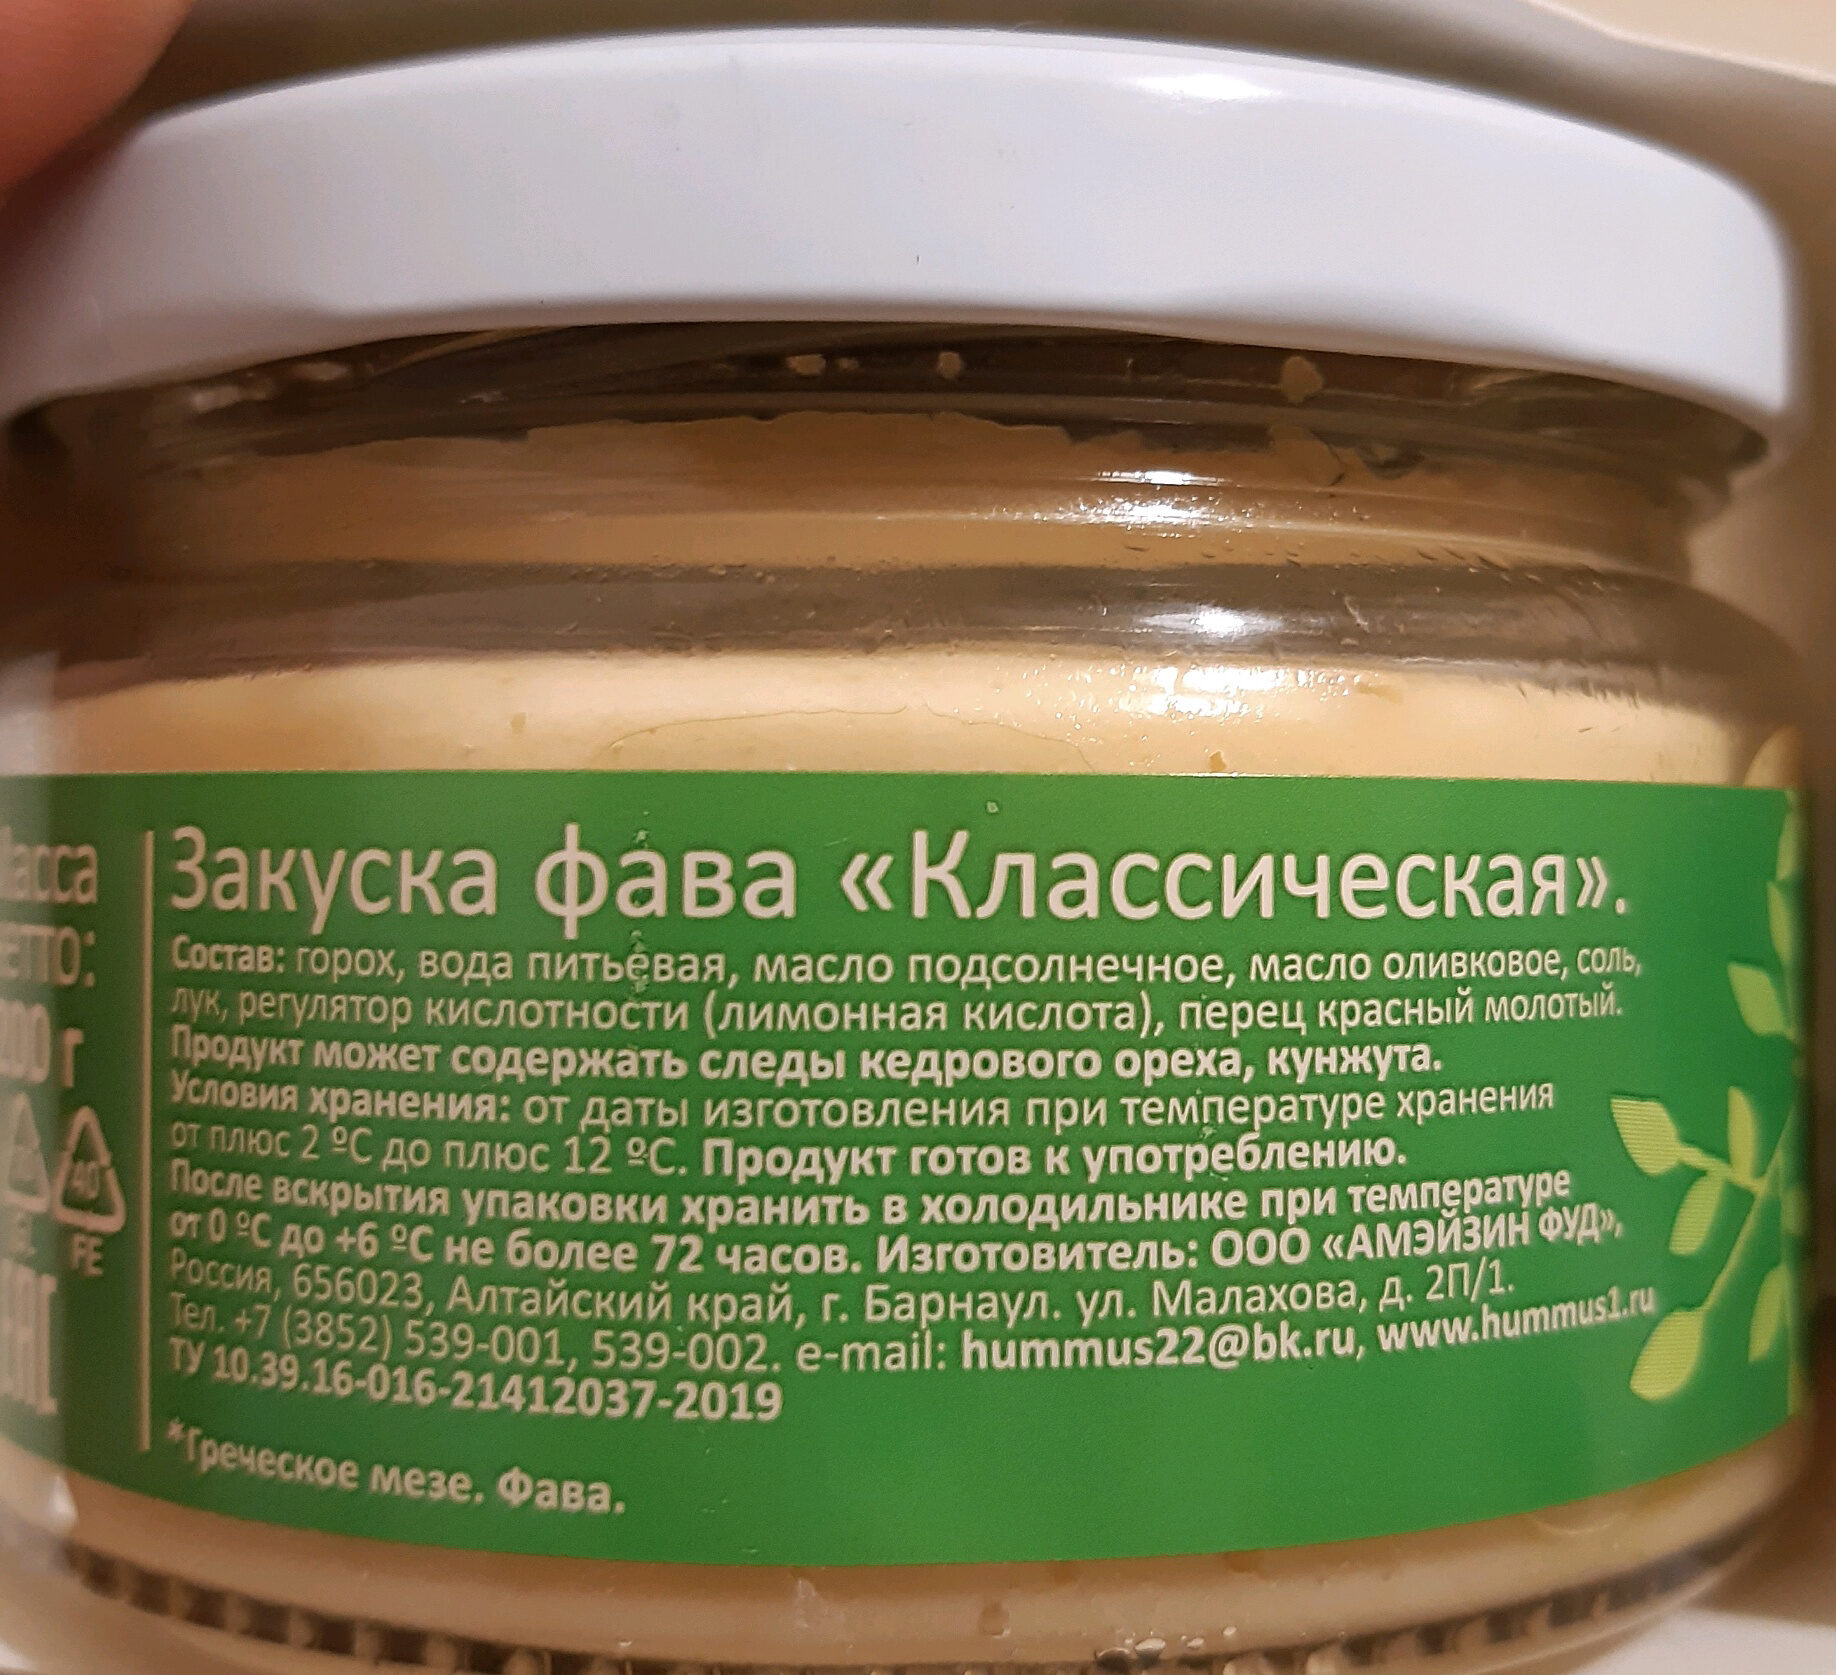 Закуска фава "Классическая" 200г - Ingredienser - ru